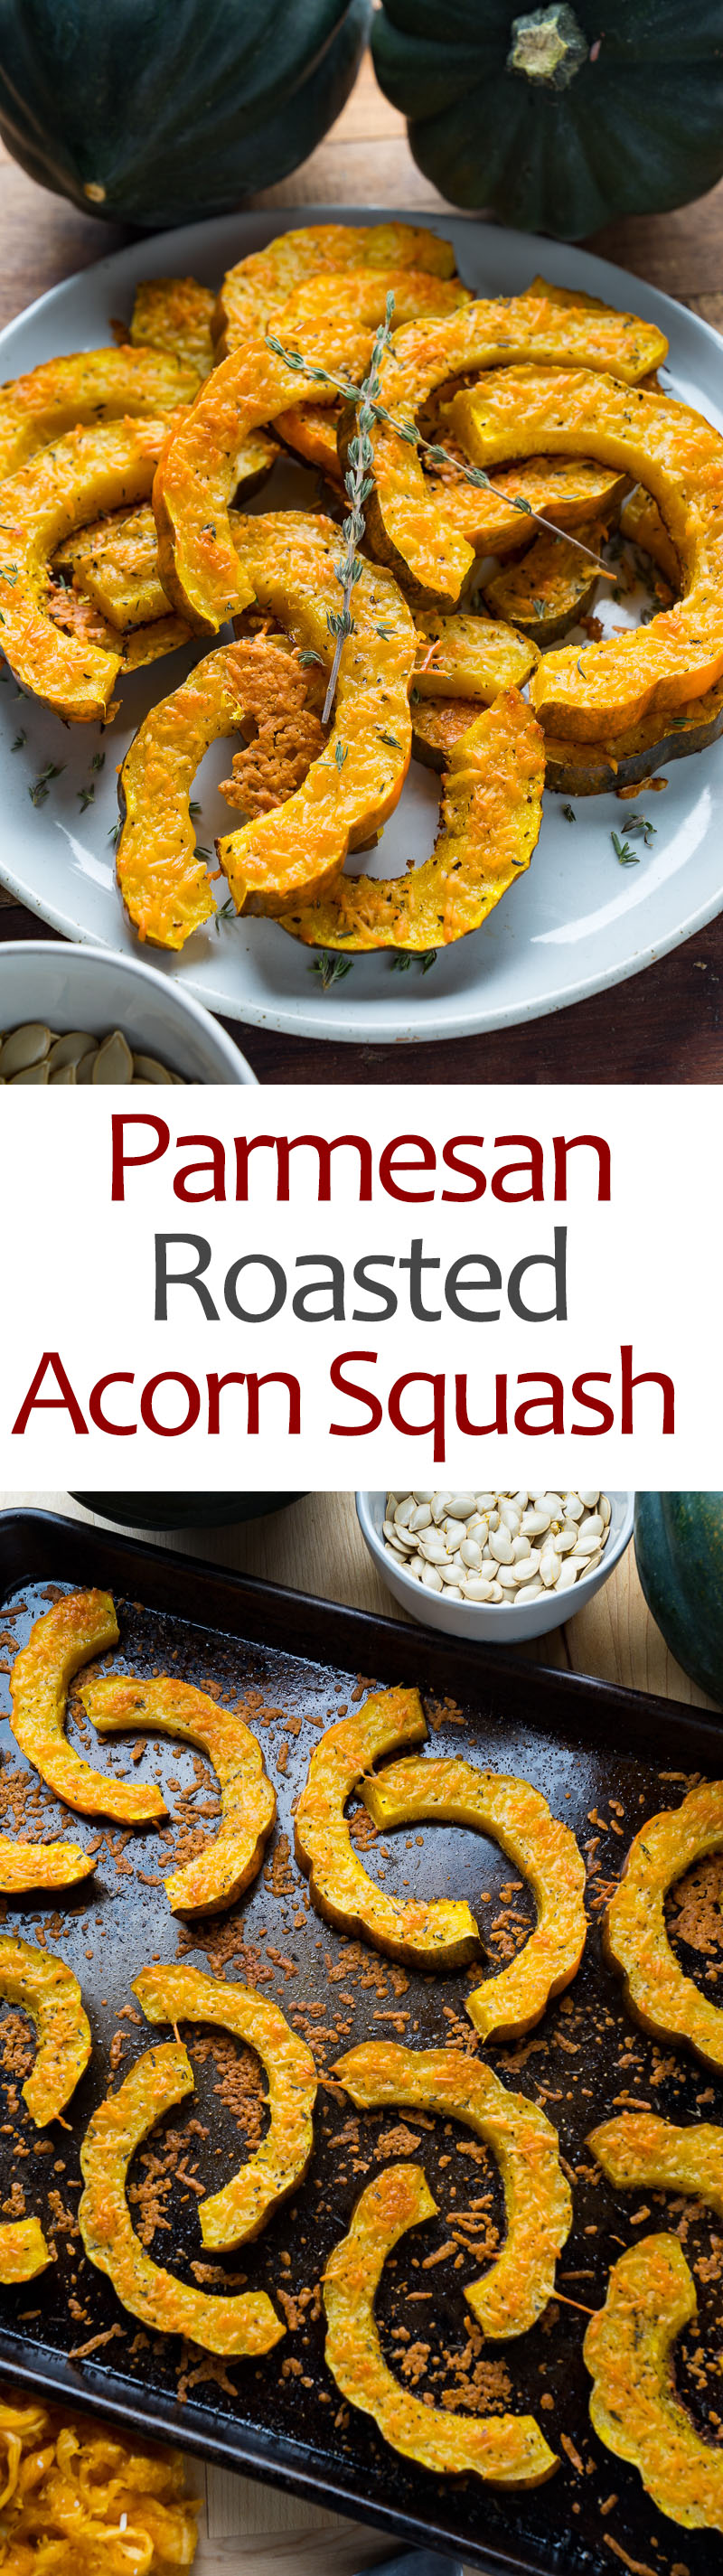 Parmesan Roasted Acorn Squash